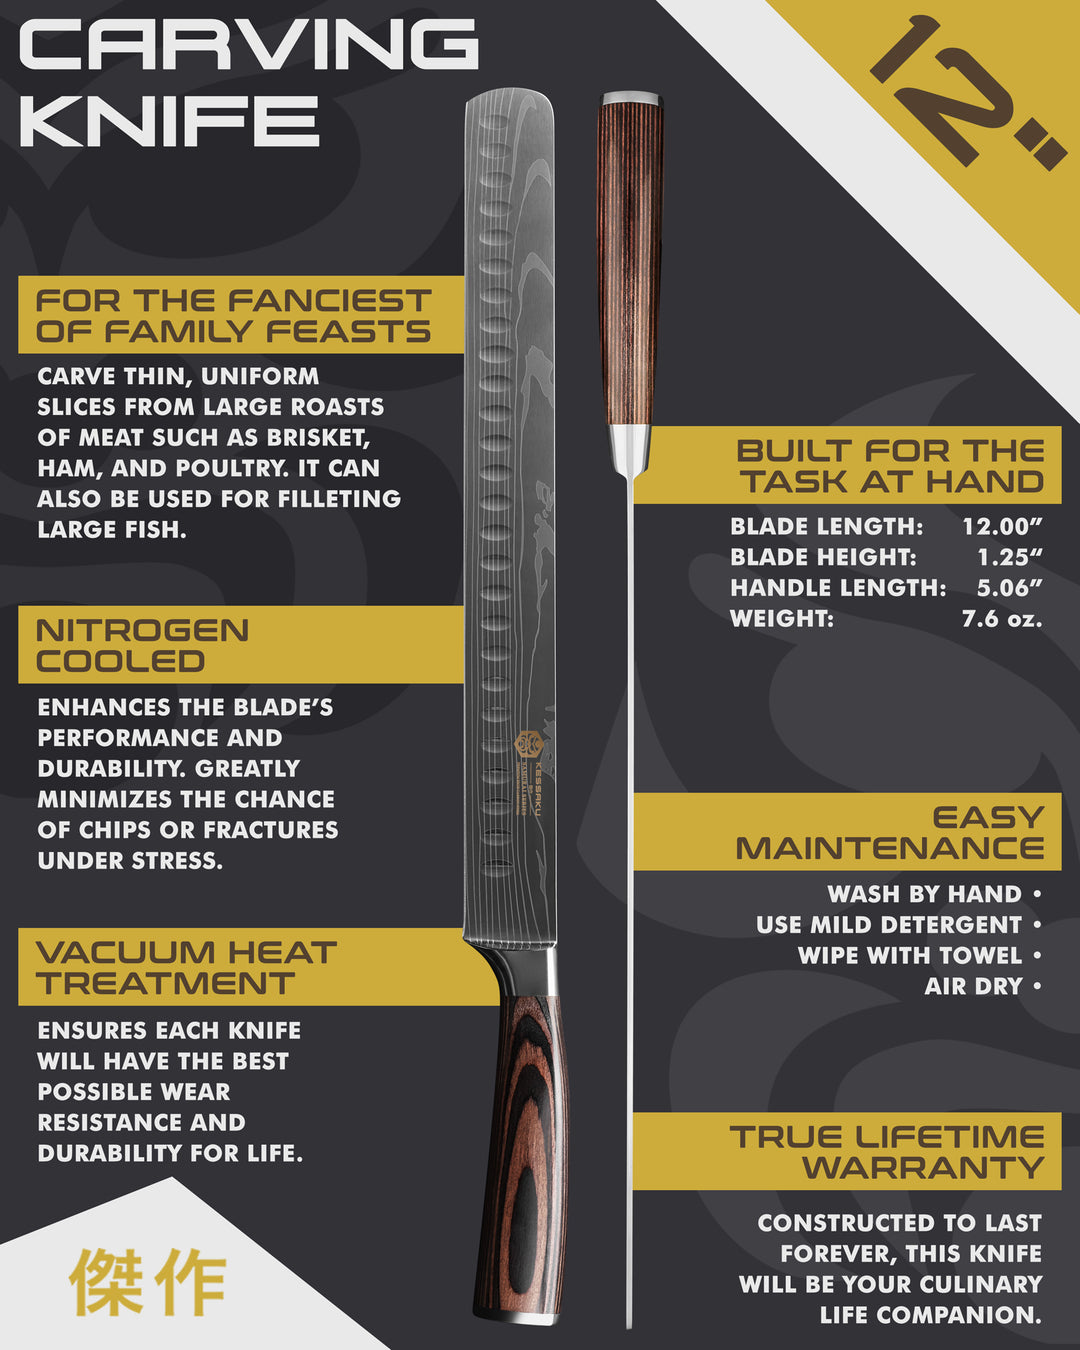 Kessaku Samurai Series Carving Knife uses, dimensions, maintenance, warranty info, and additional blade treatments